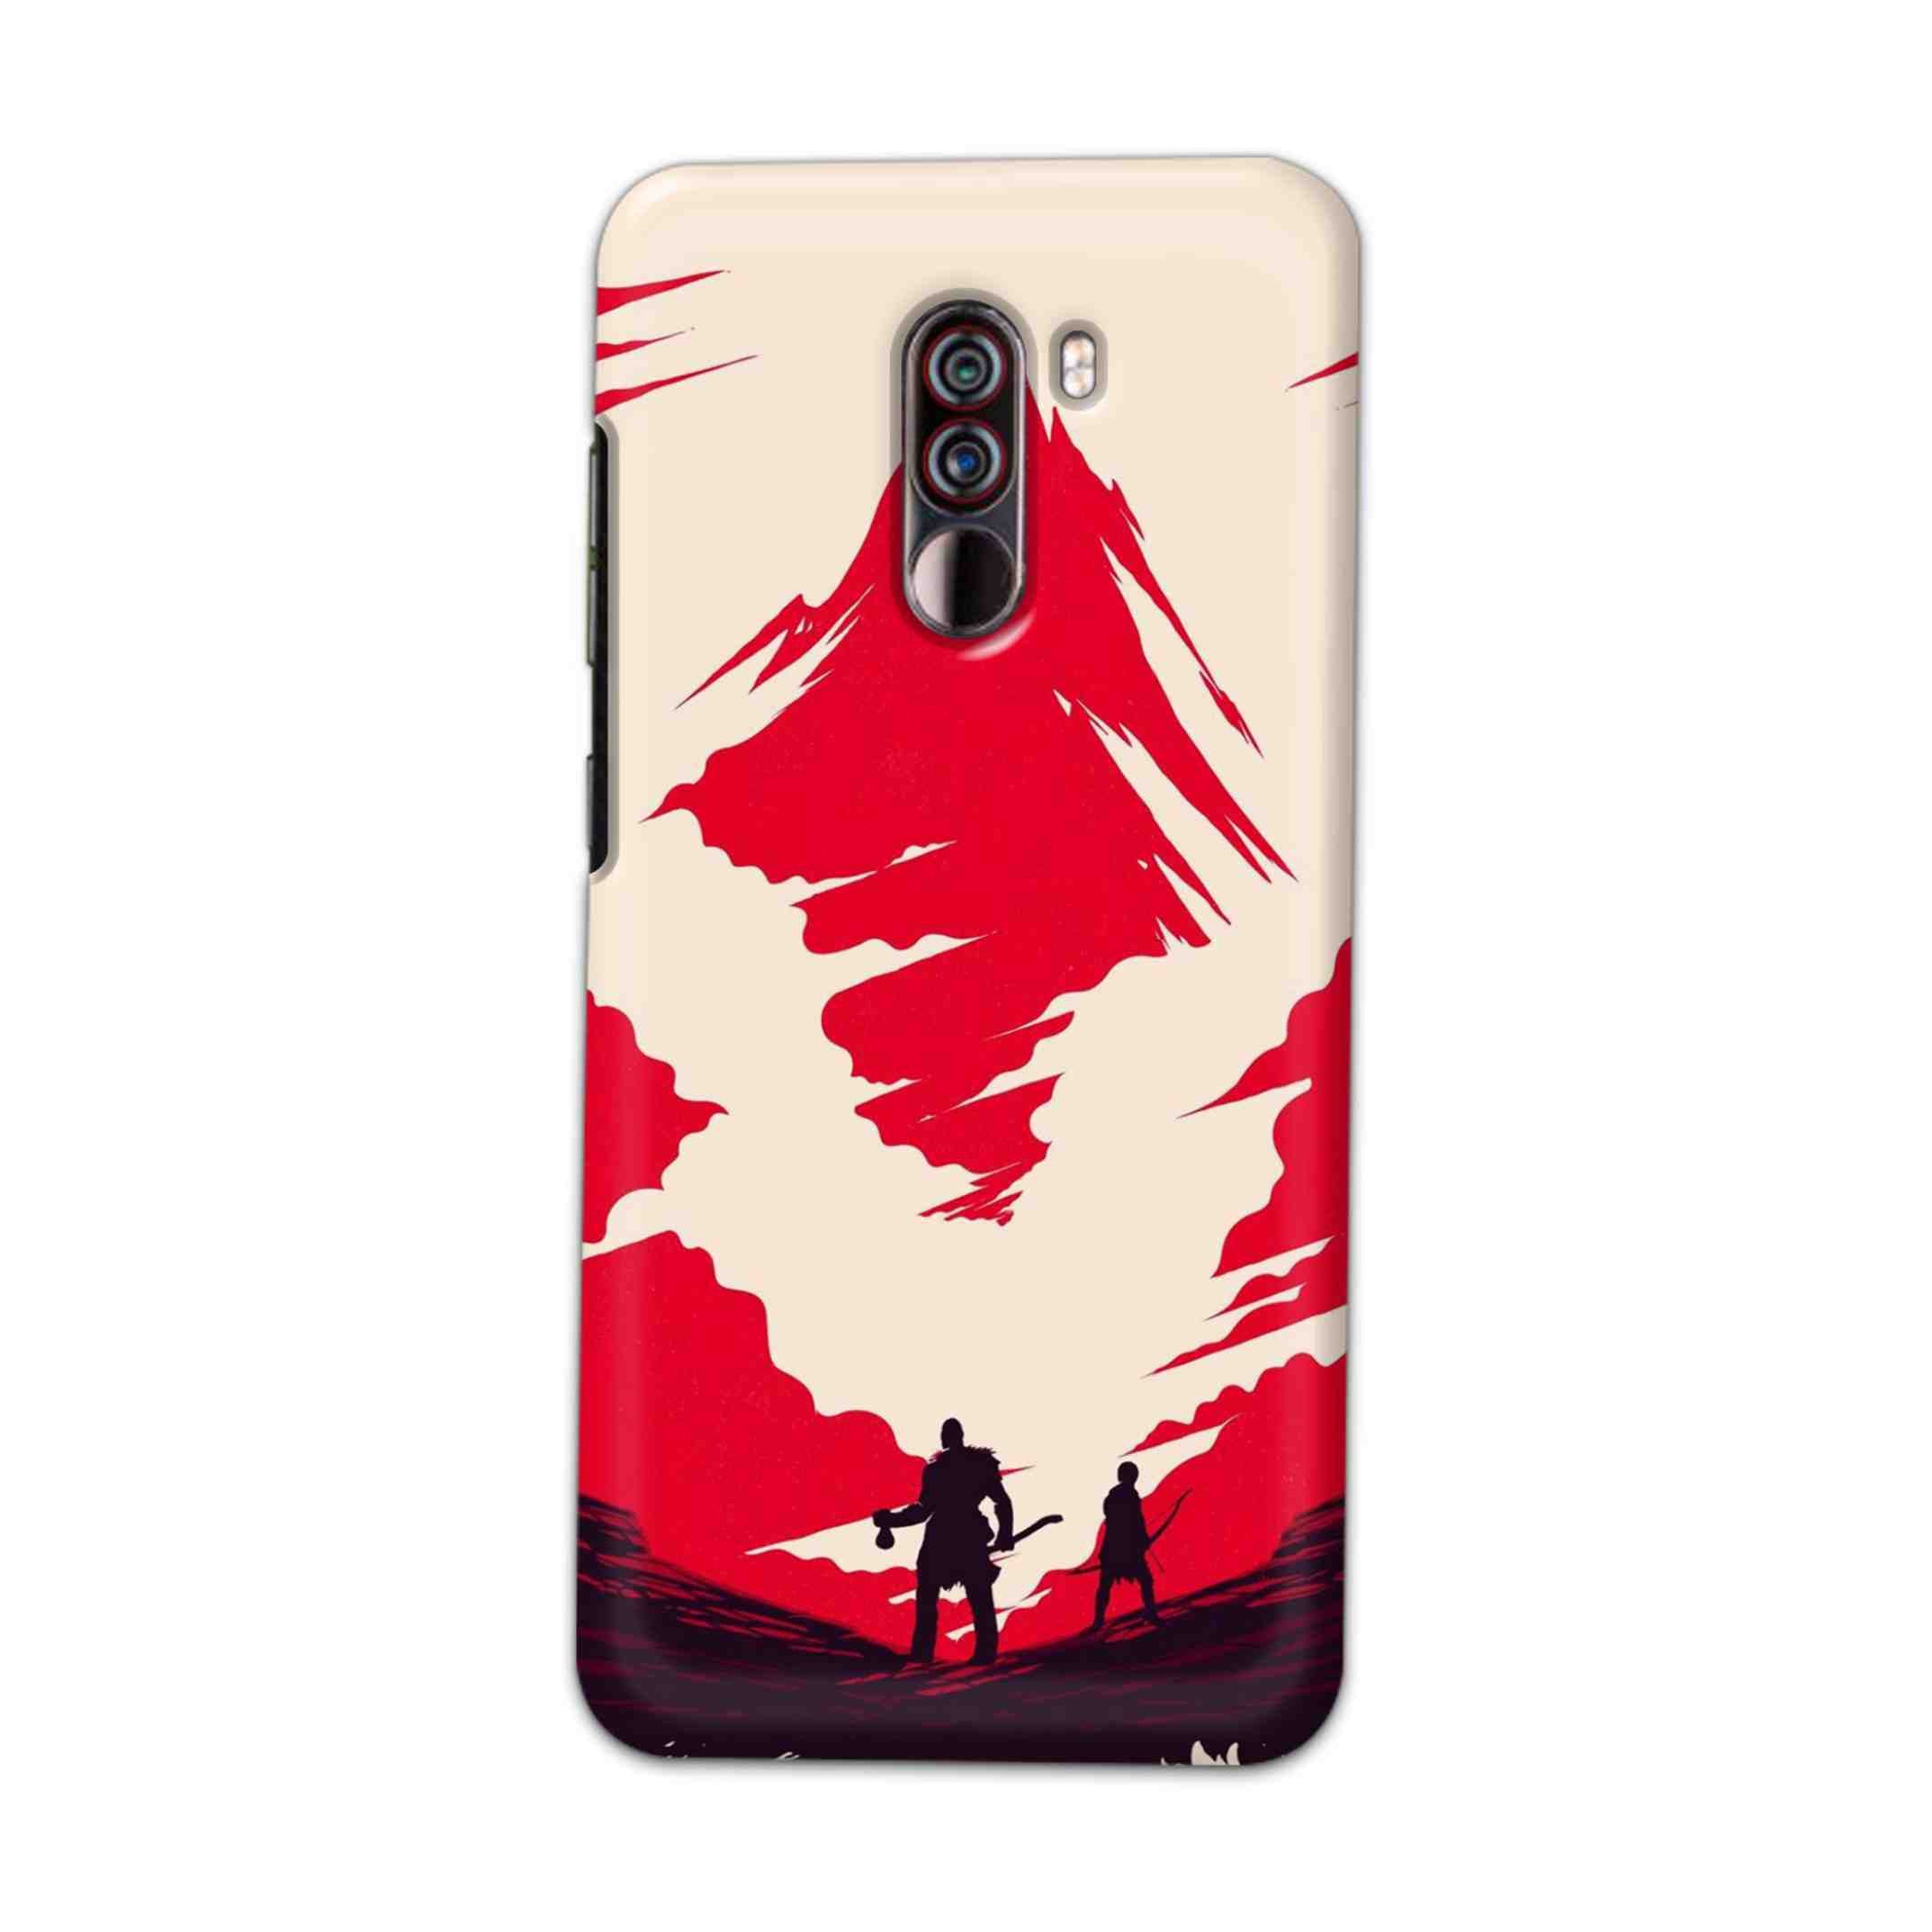 Buy God Of War Art Hard Back Mobile Phone Case Cover For Xiaomi Pocophone F1 Online